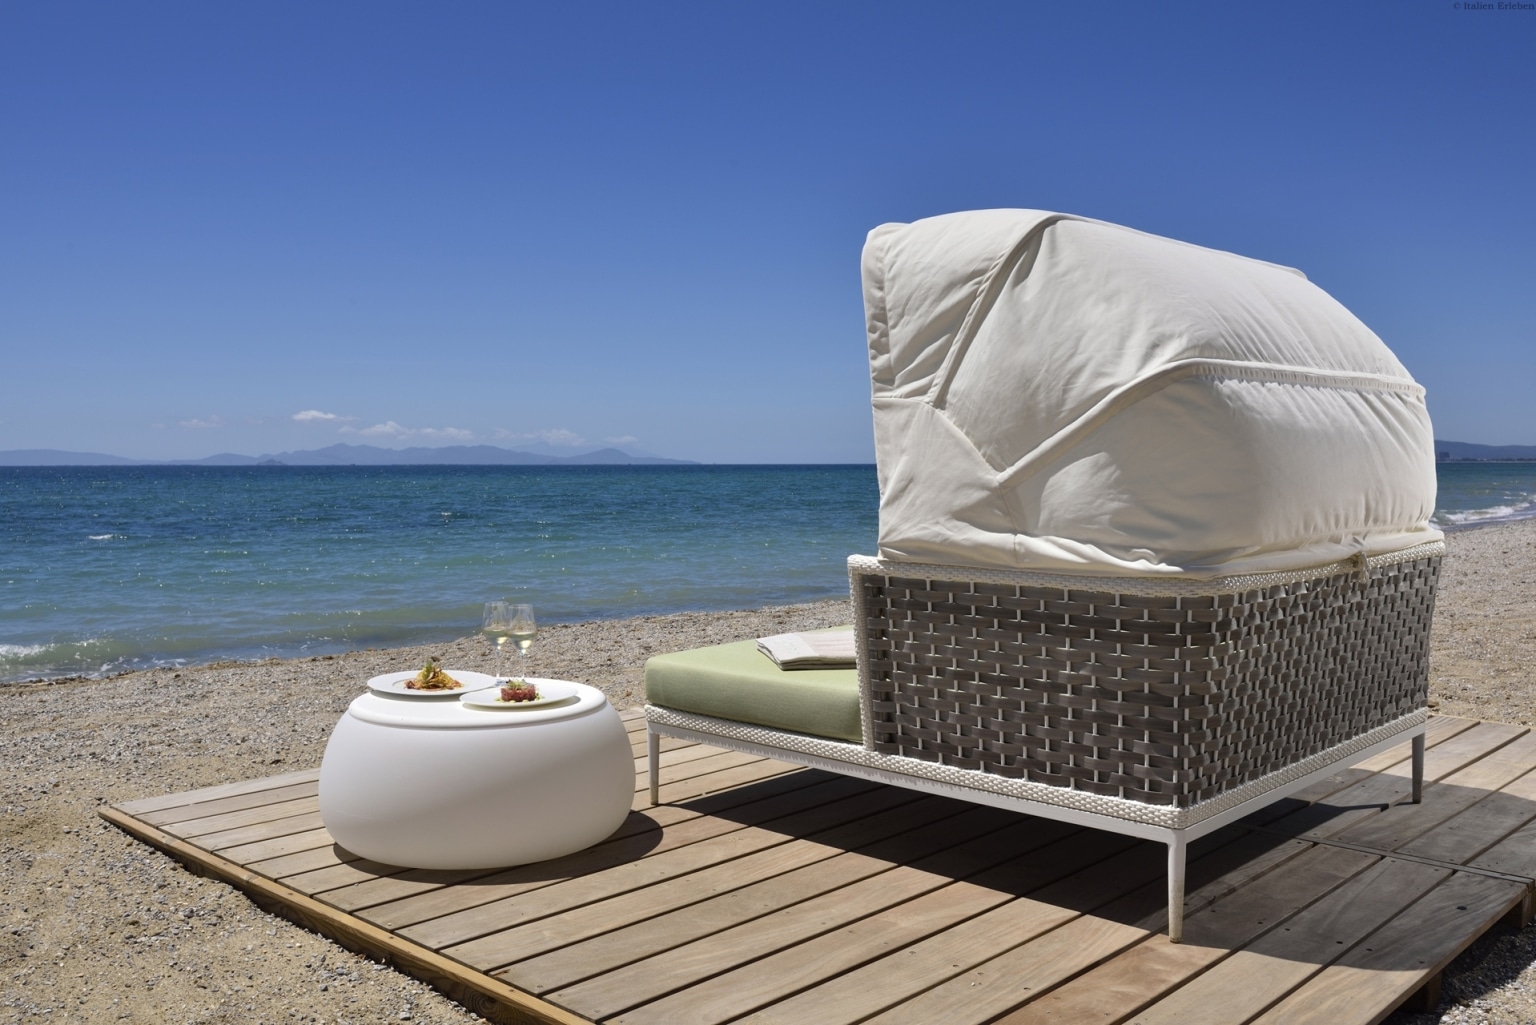 Toskana Hotel The Sense Experience Resort Follonica Maremma direkt Meer Pinien Strand Sand Pool Liege Cavanas